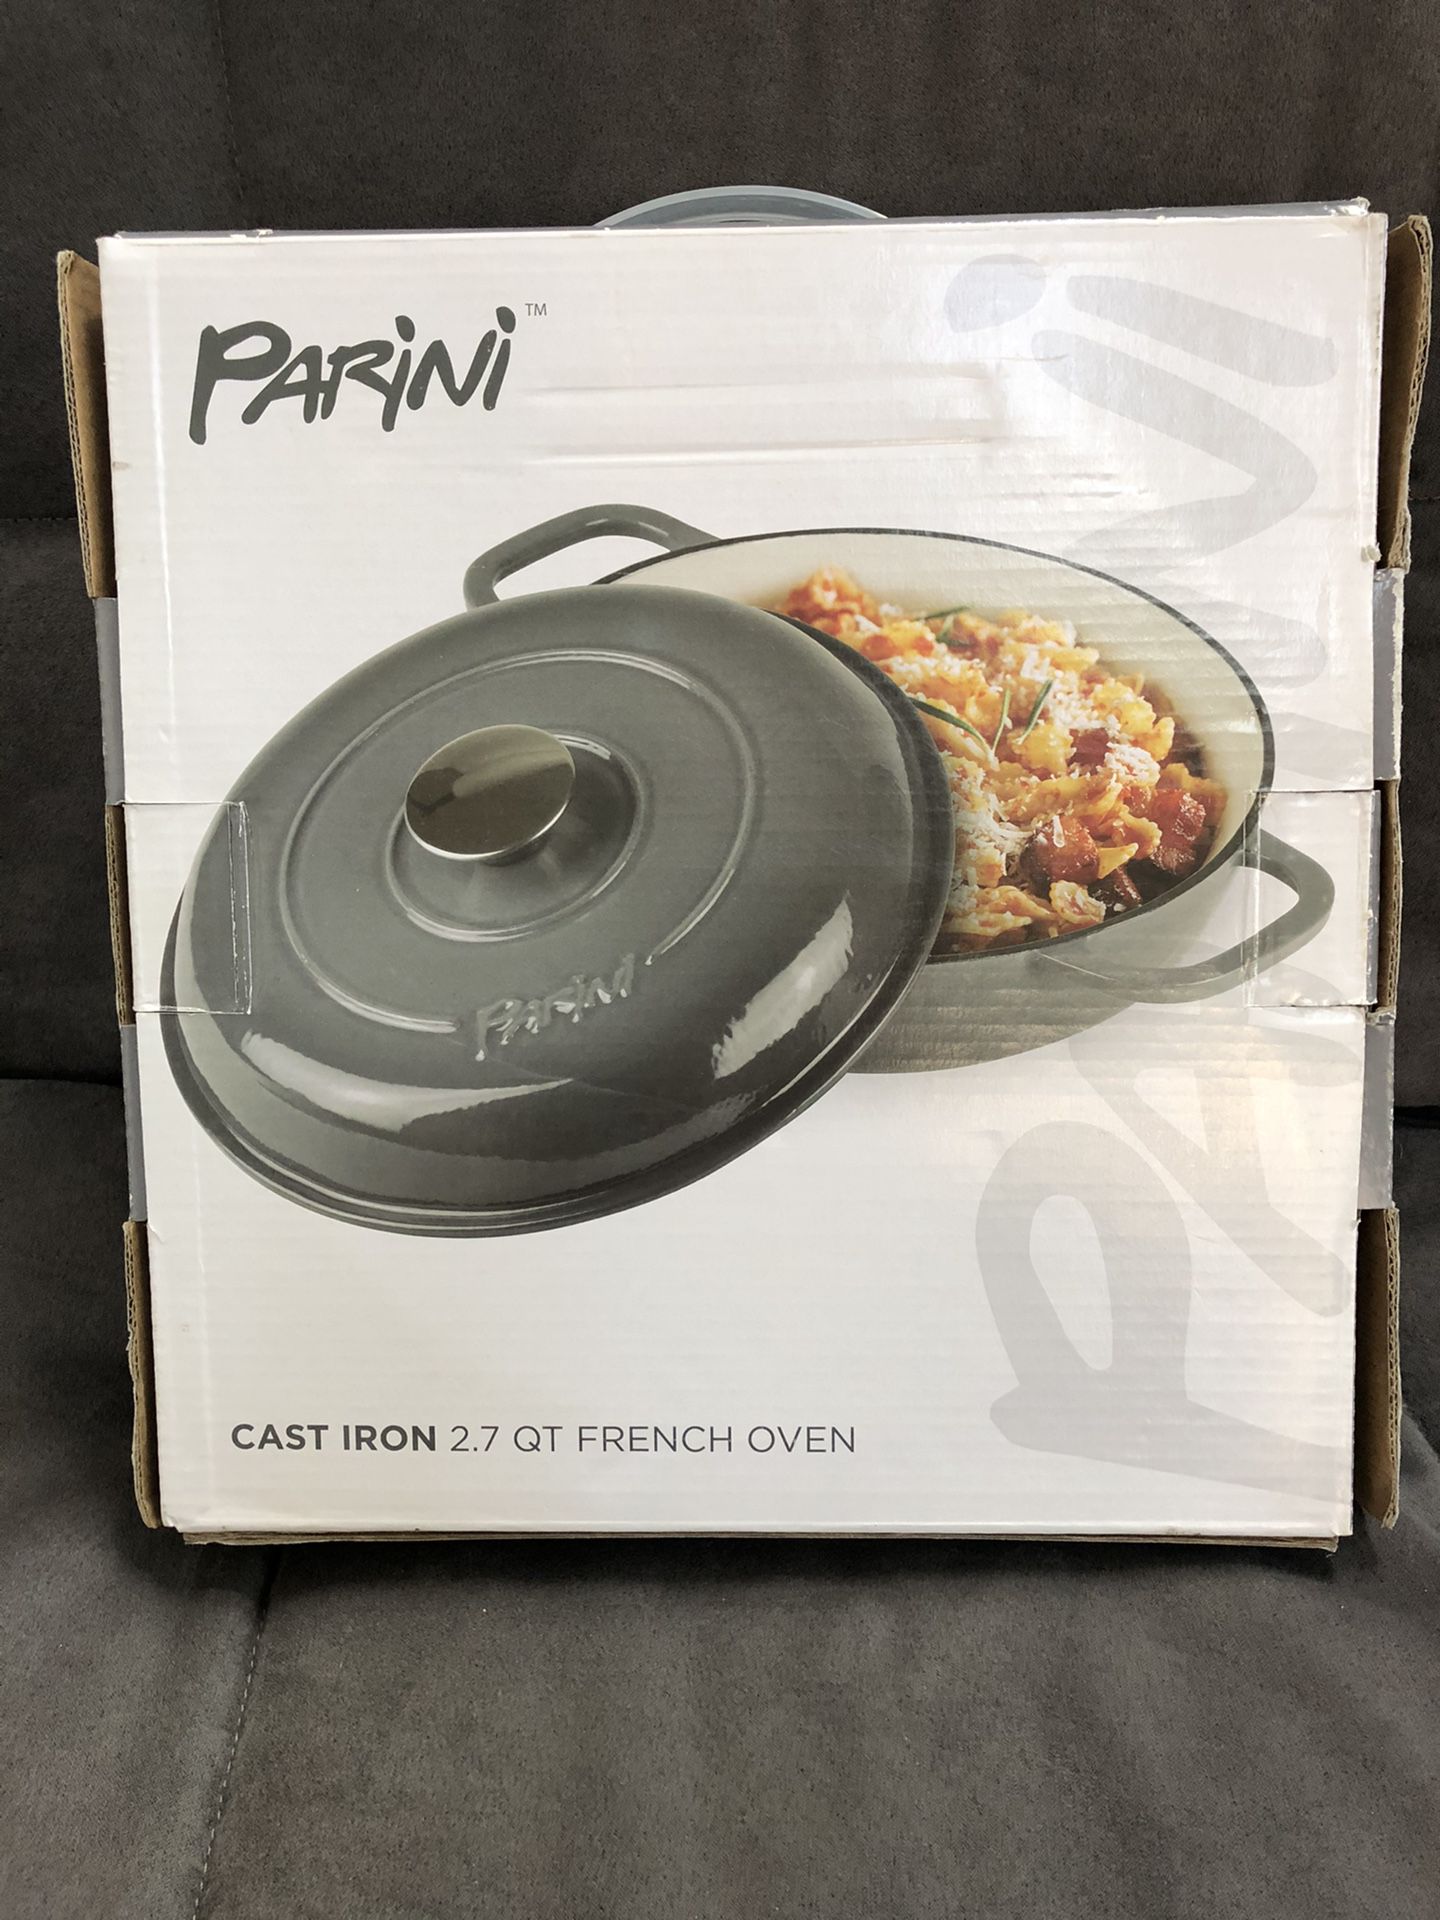 Parini cast iron pan